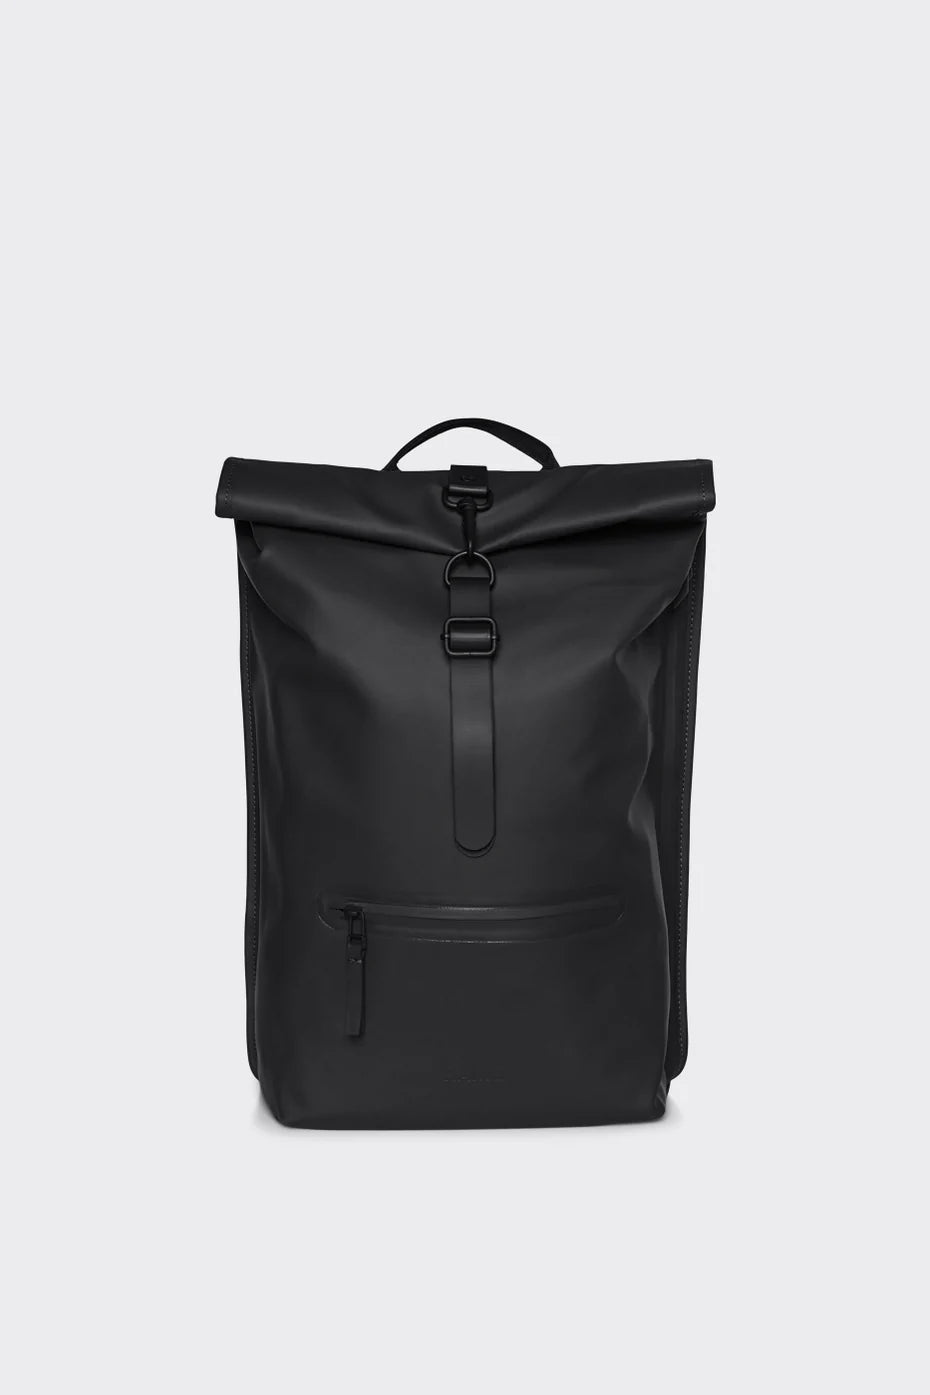 Best waterproof laptop backpack minimalist